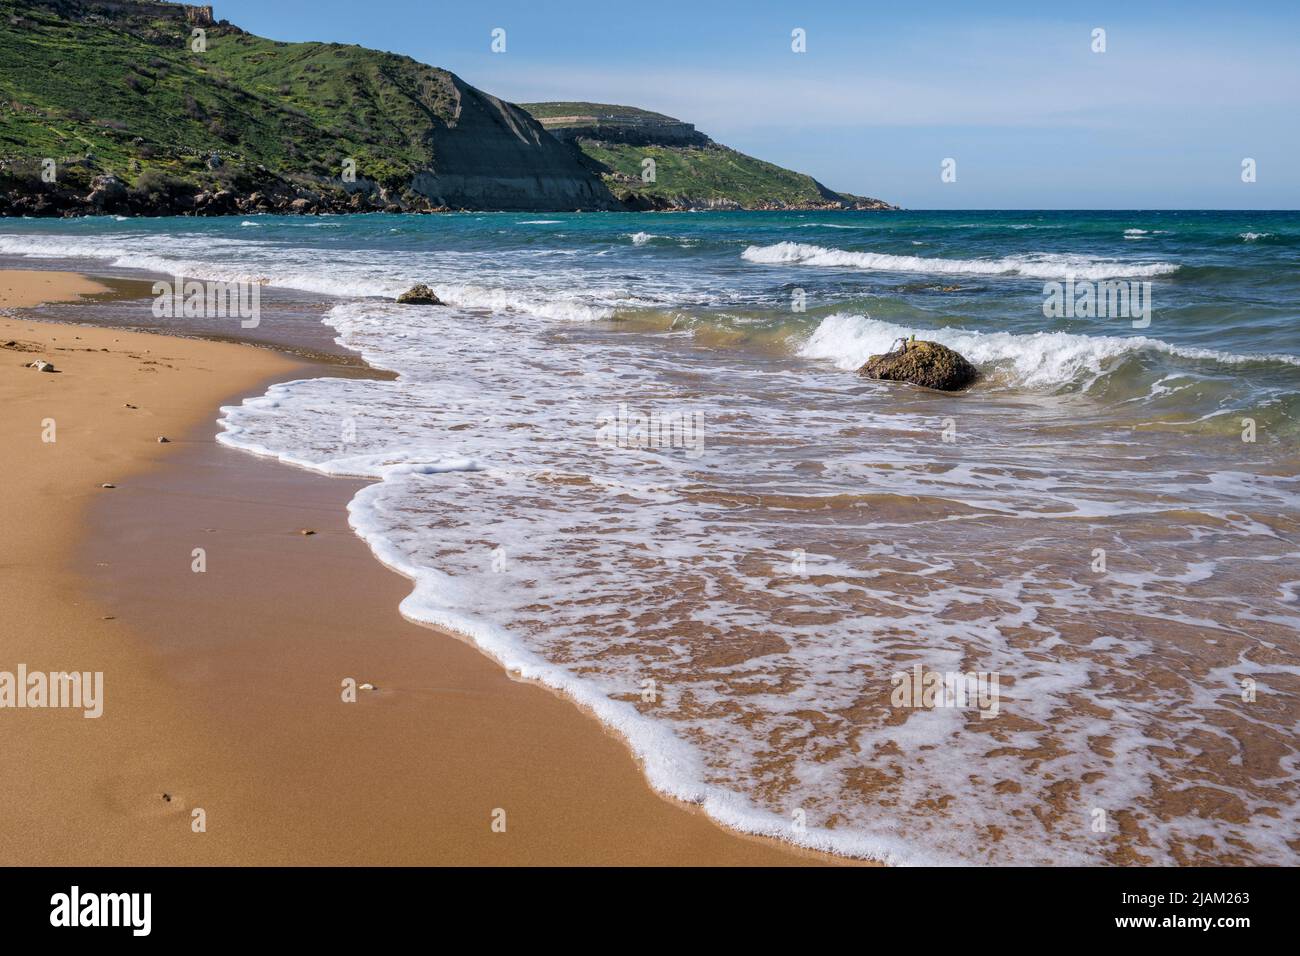 Waves breaking on the deserted sandy beach at Ramla Bay, Gozo, Malta Stock Photo